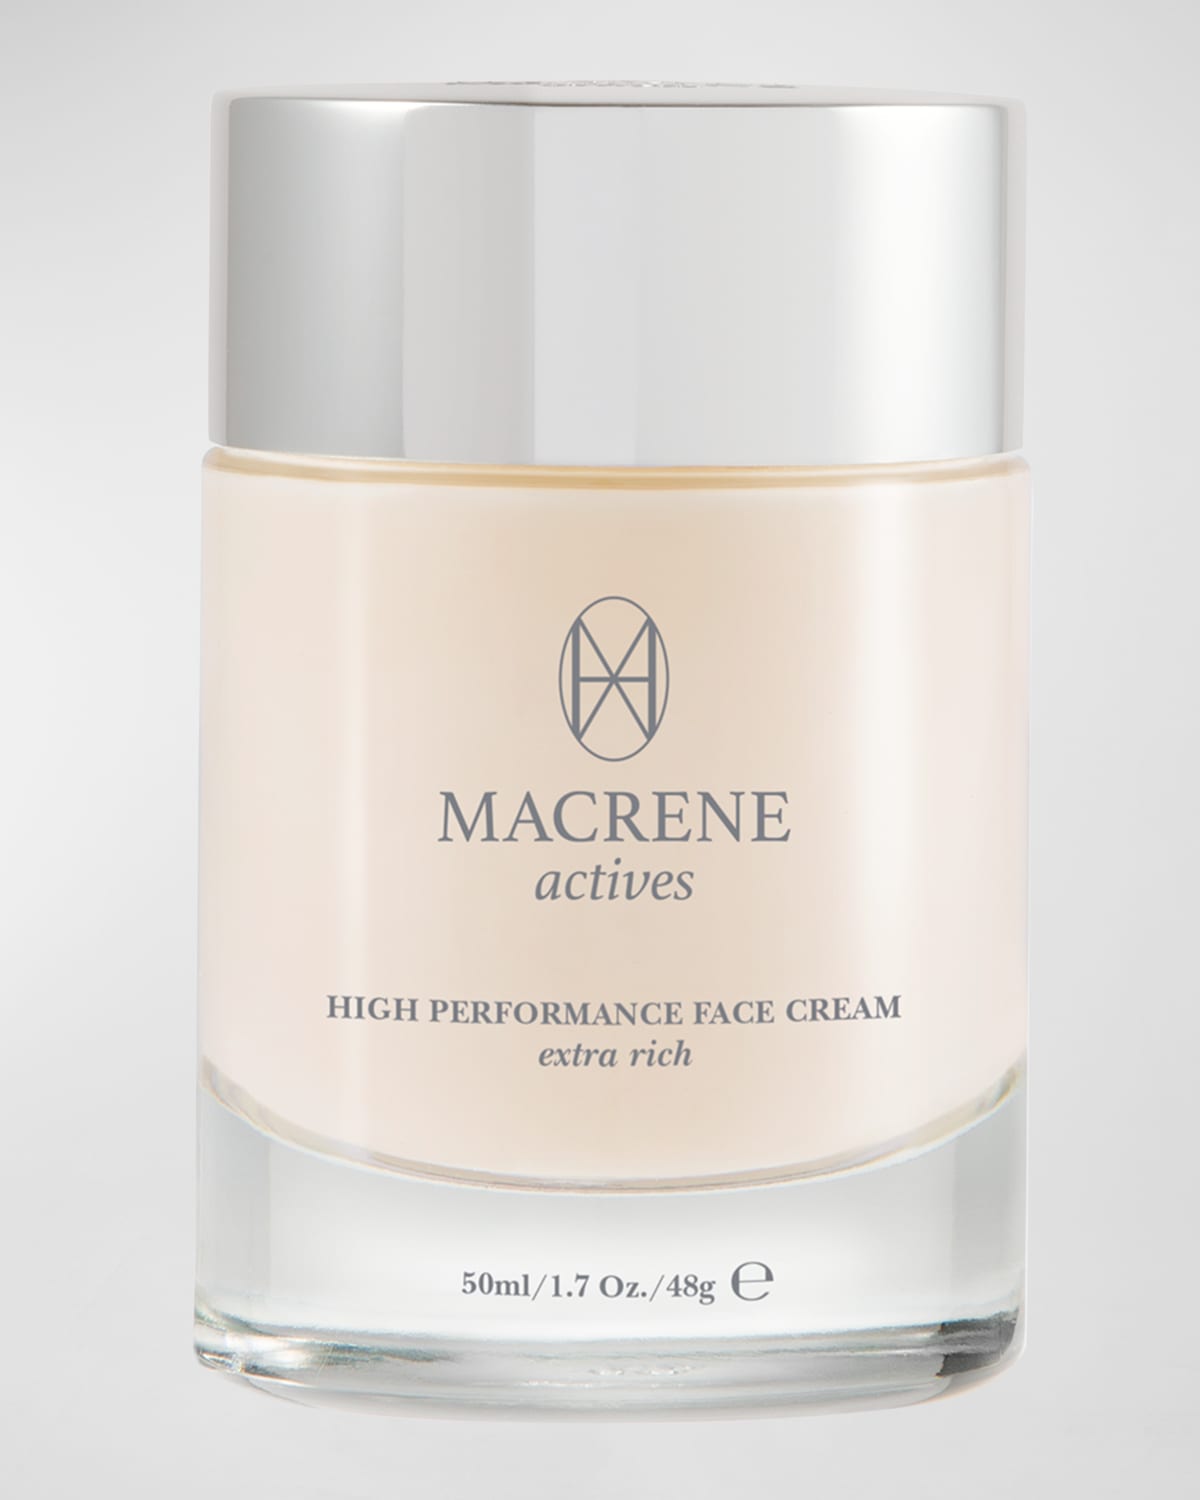 Macrene Actives High Performance Face Cream - Extra Rich, 1.7 oz.